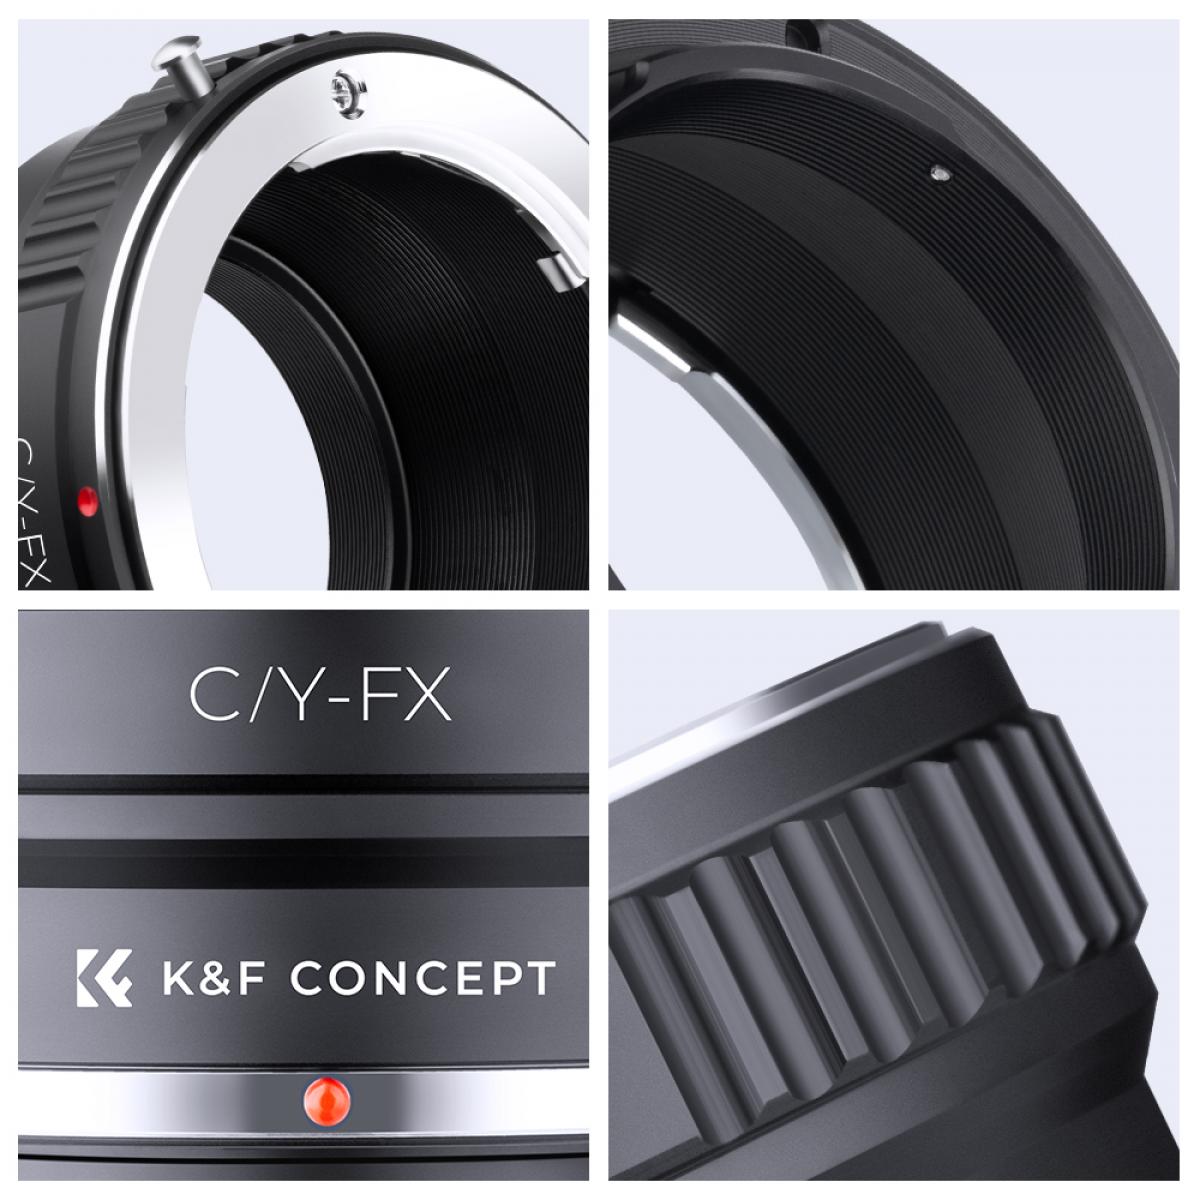 Contax to Fuji Adapter,Fujifilm Contax,C/Y to FX